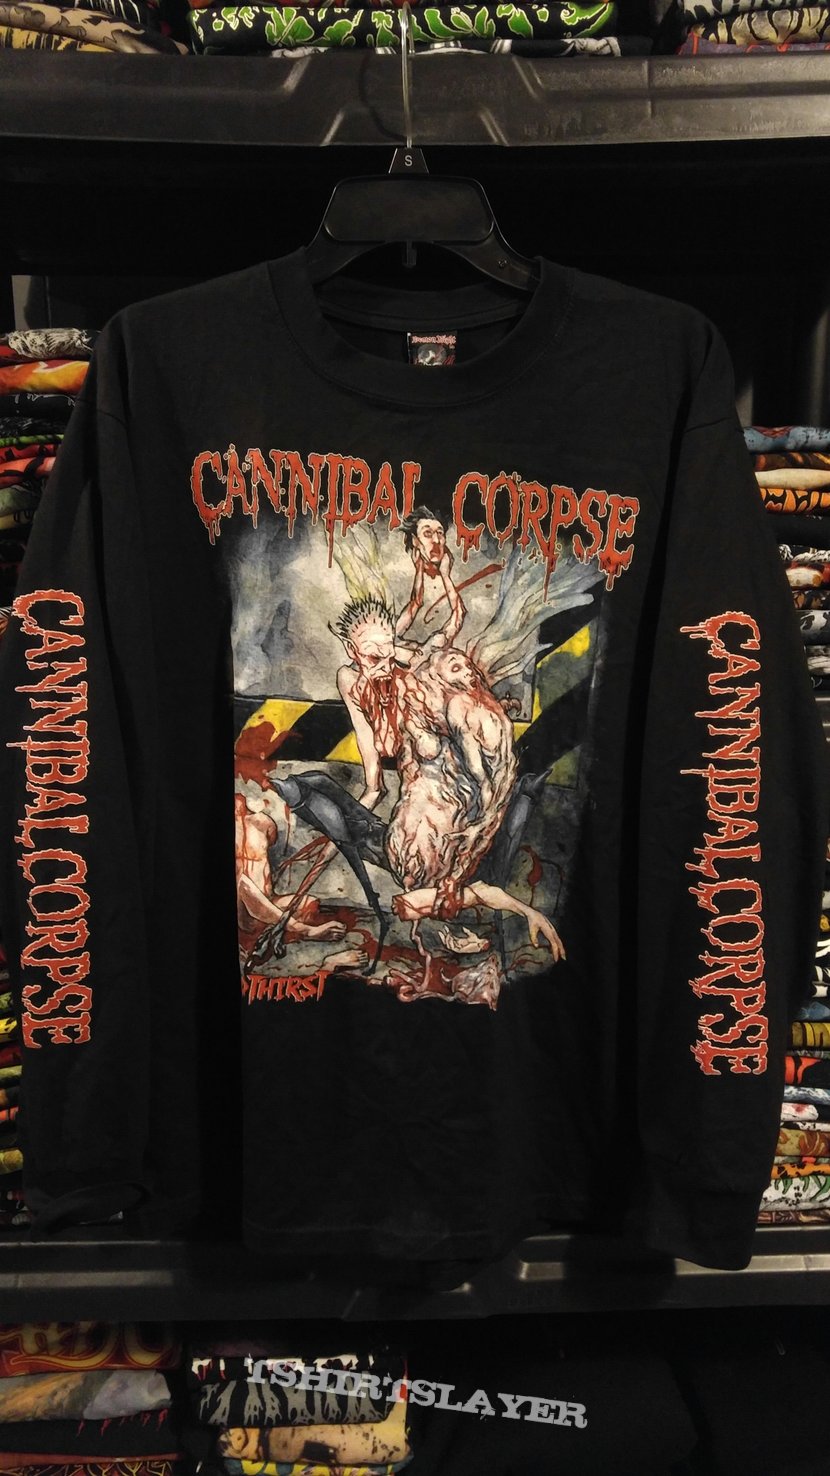 Cannibal Corpse longsleeve